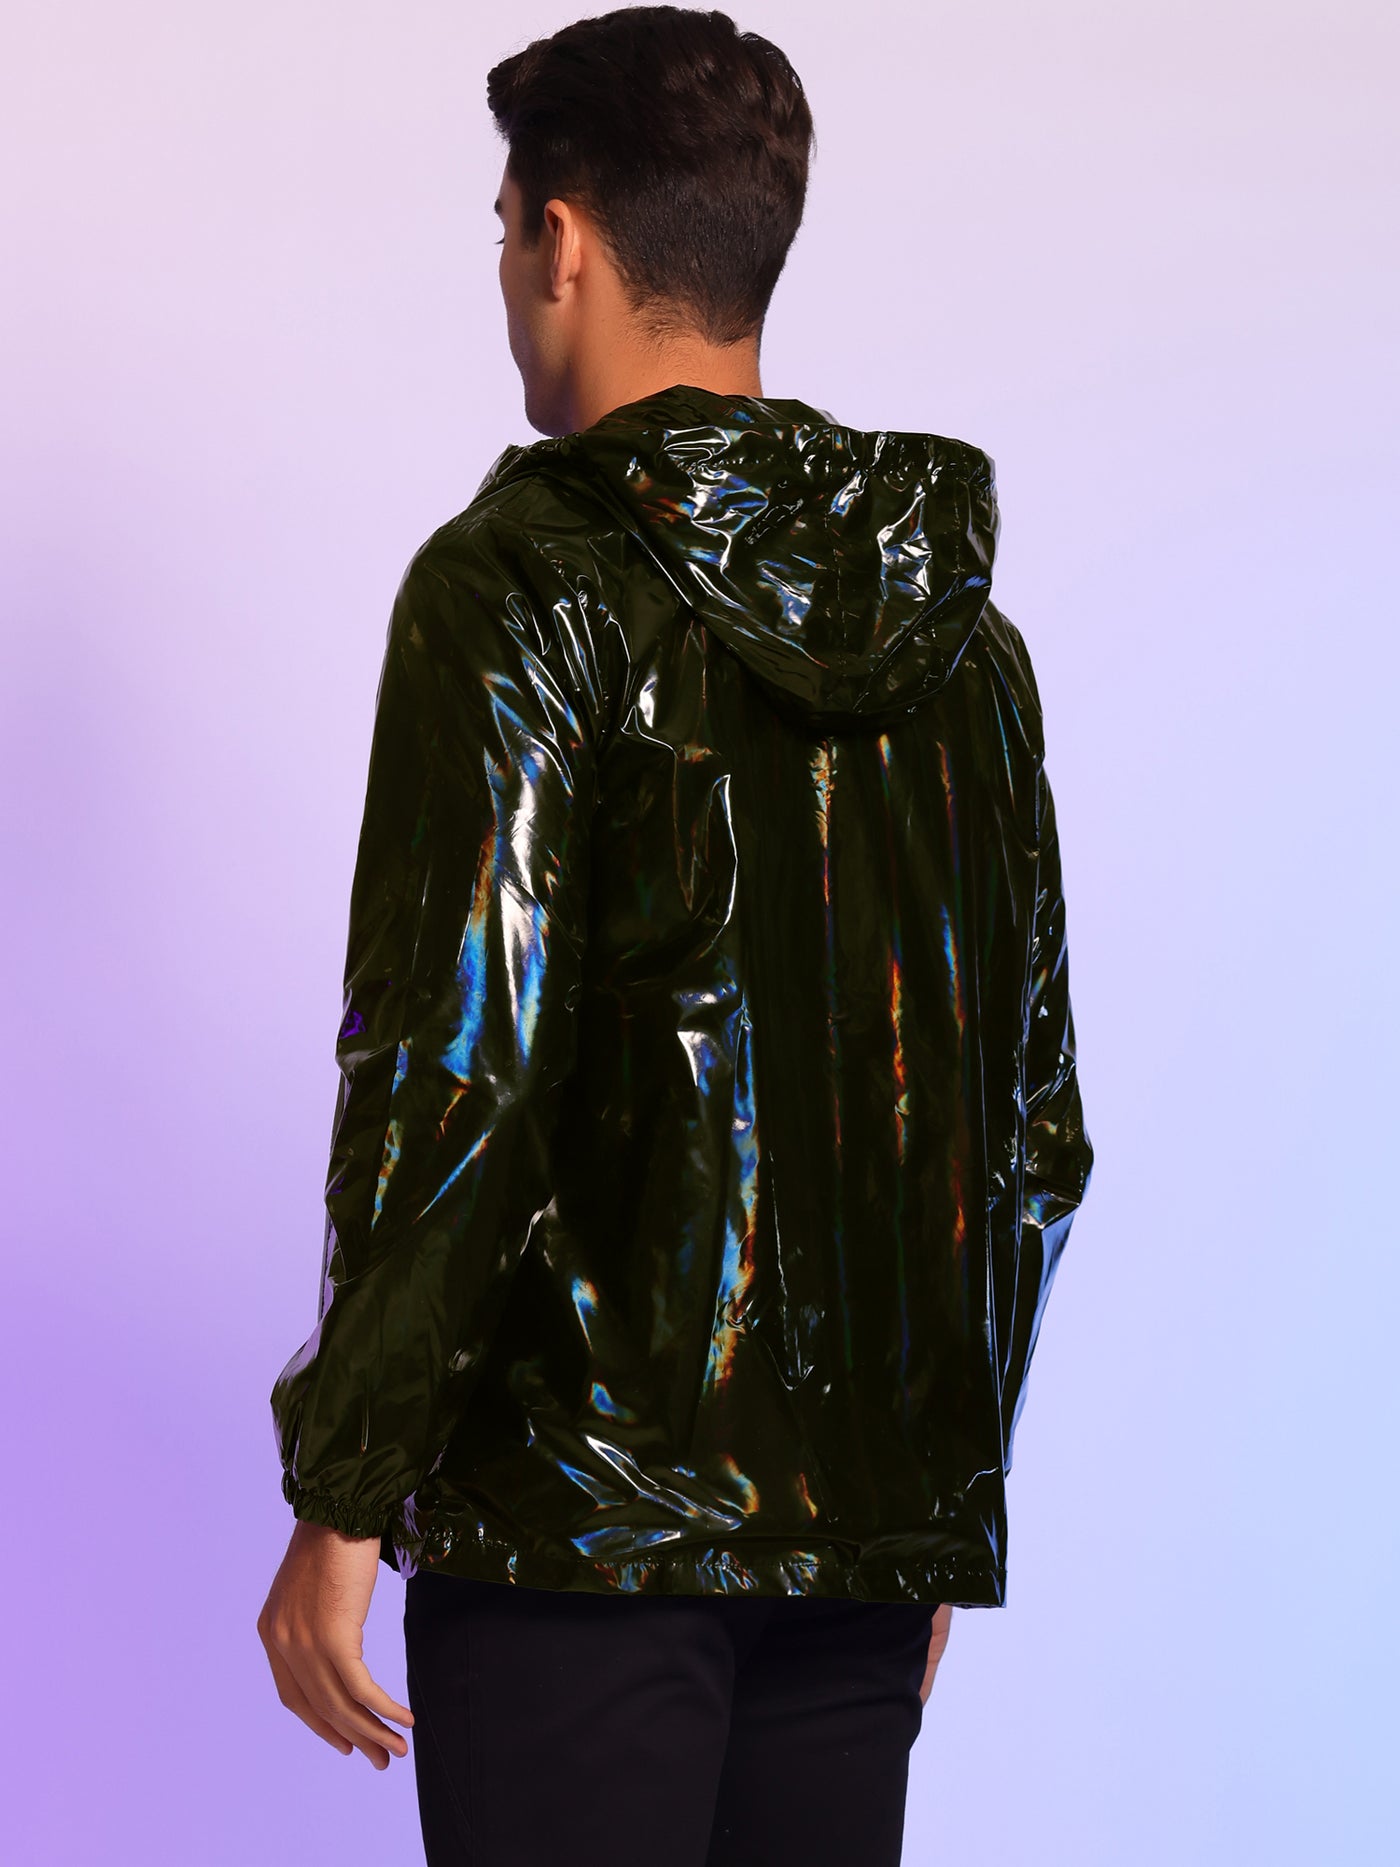 Bublédon Metallic Jacket for Men's Solid Zipper Sparkle Shiny Holographic Hooded Windbreaker